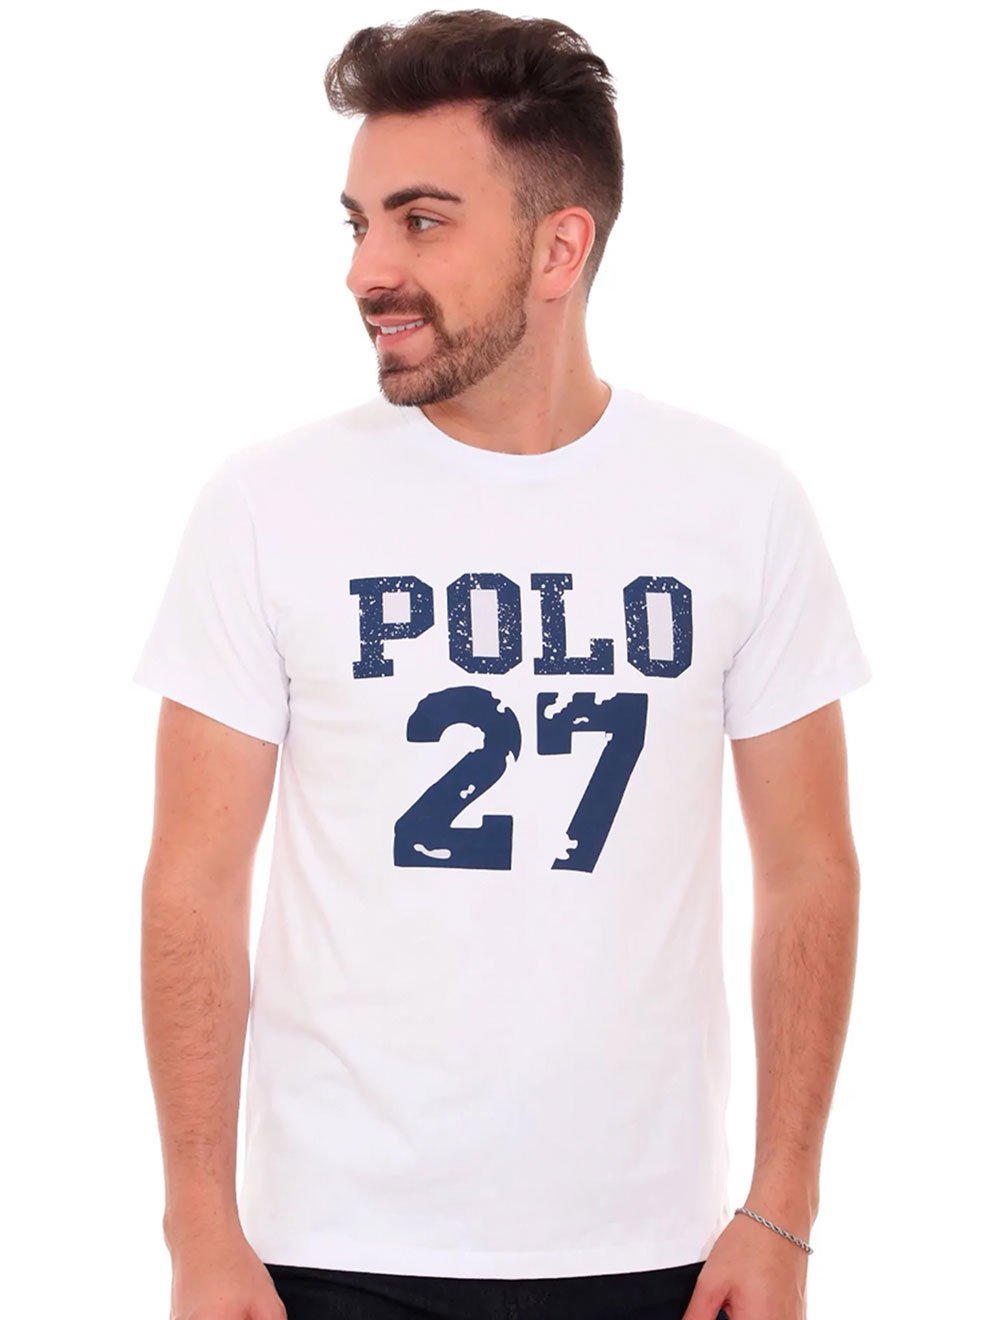 Camiseta Ralph Lauren Masculina Polo 27 Branca